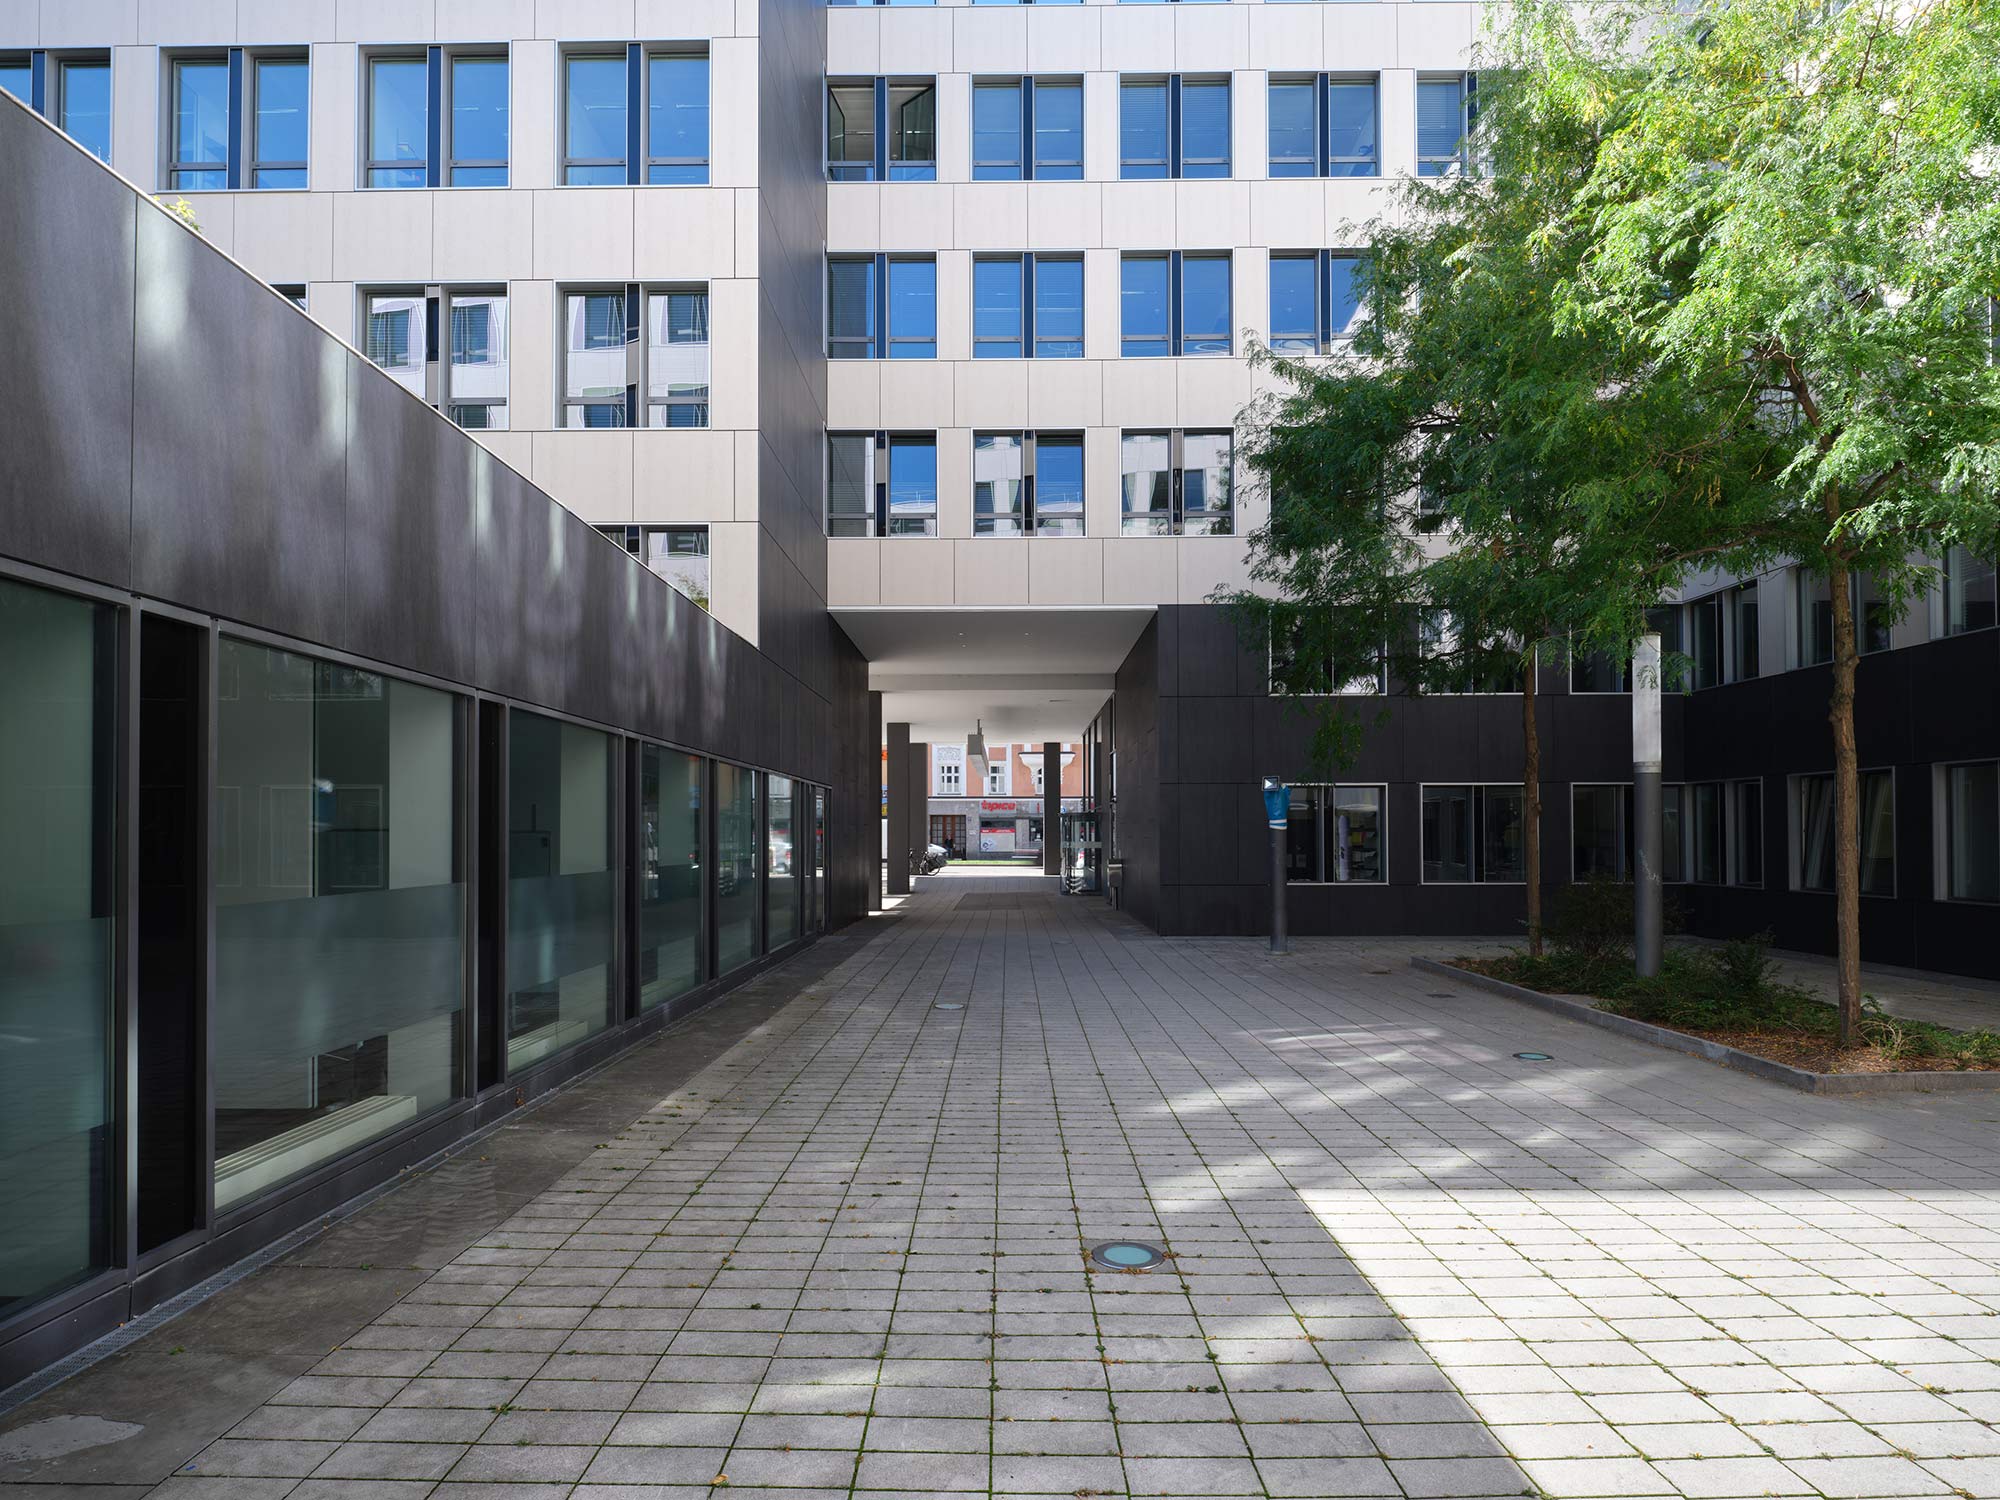 Image of Fachada office building Munich in Carprometal building - Cosentino